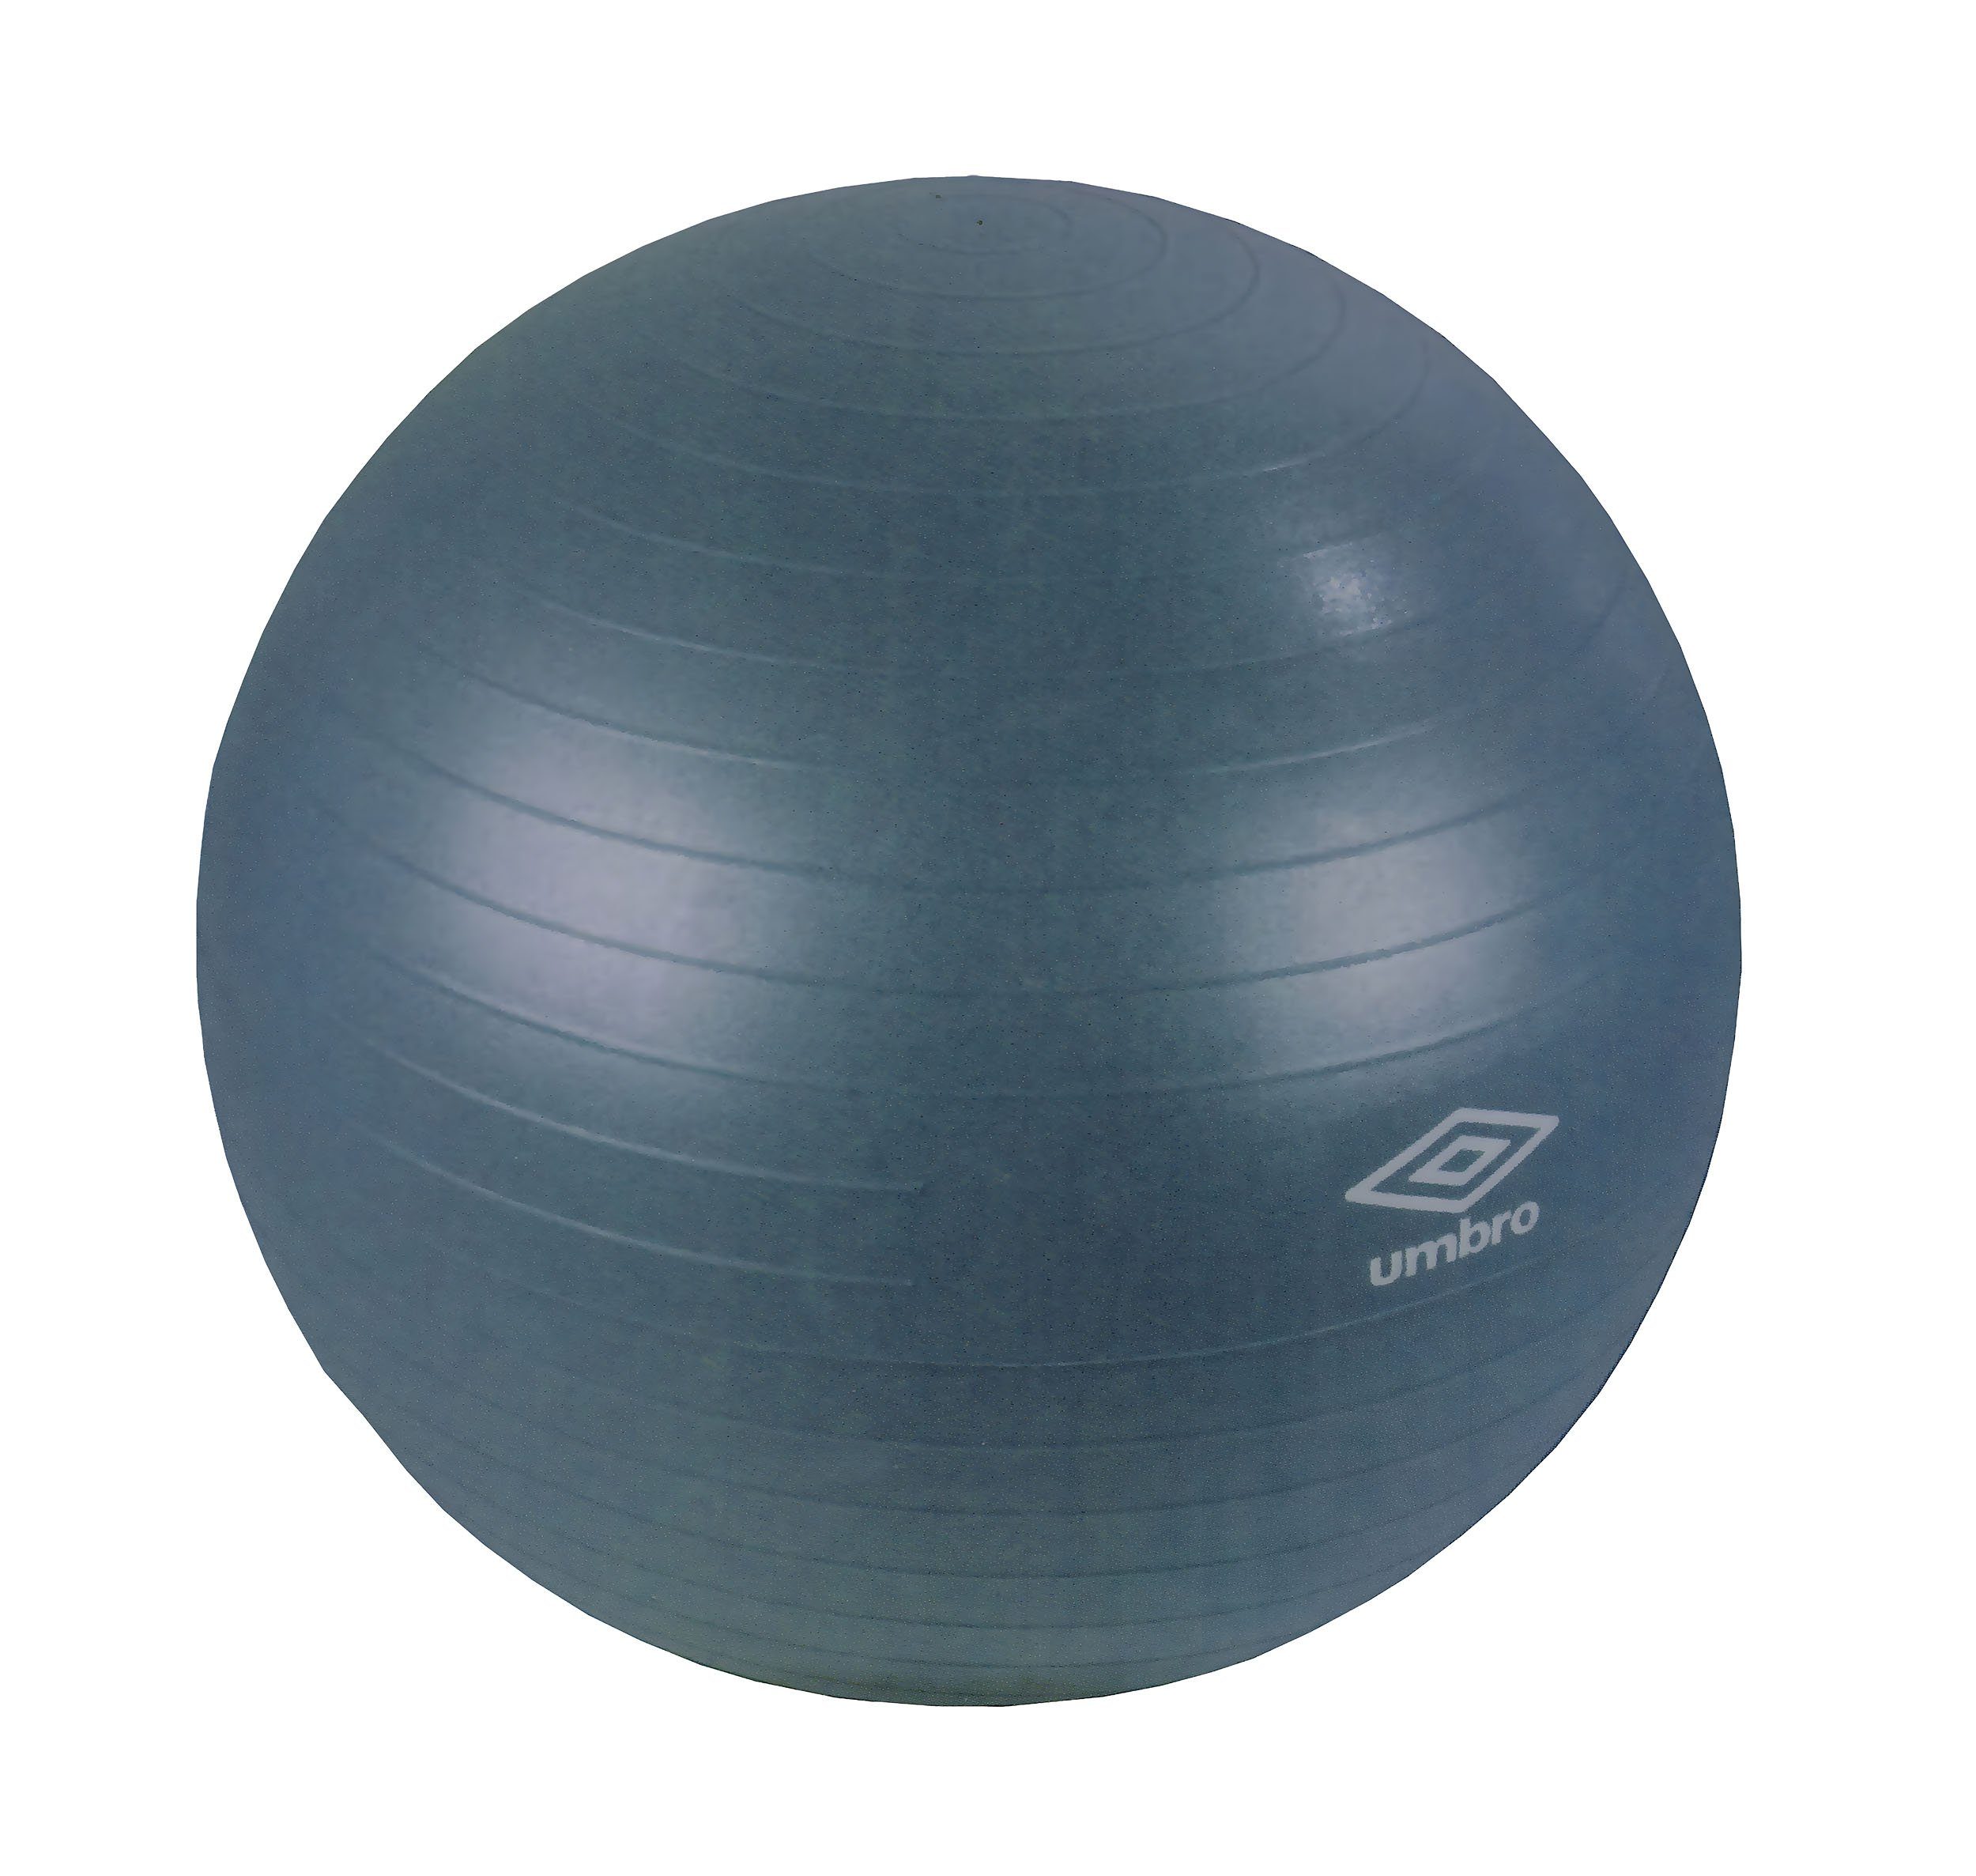 GYMNASTIKBALL Muskelaufbau Umbro Sitzball Fitness Ball Gymnastik Medizinball Fitnessball Blau Yogaball 55cm Gymnastikball 62,